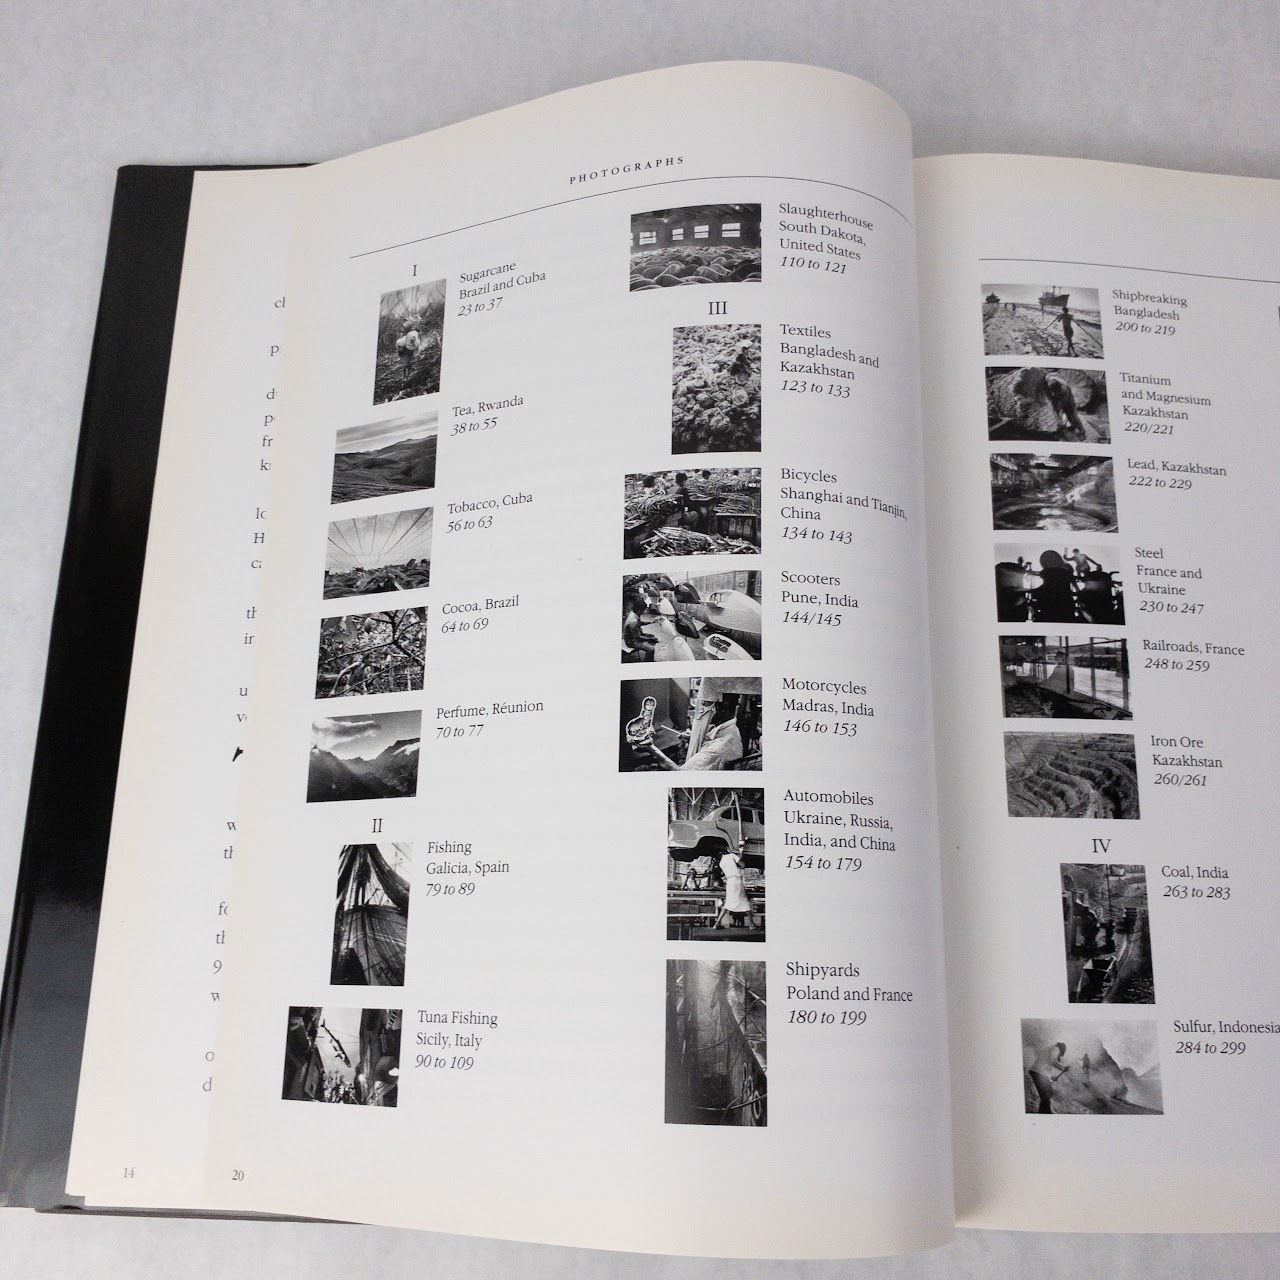 Sebastião Salgado 'Workers' First Edition Book